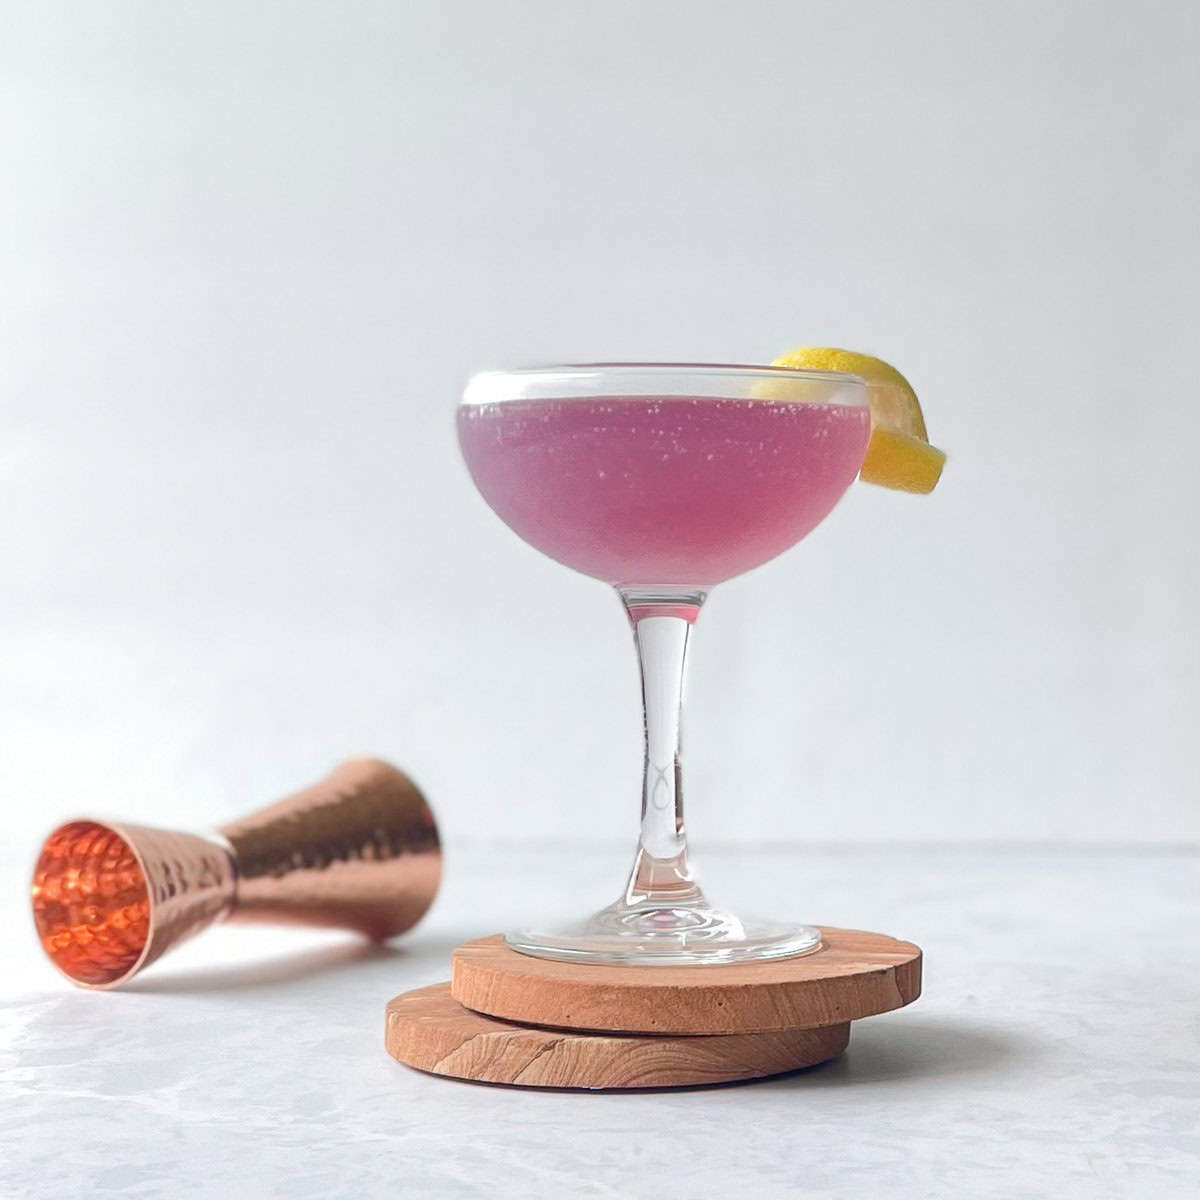 The Lady Bridgerton: an Empress Gin Cocktail